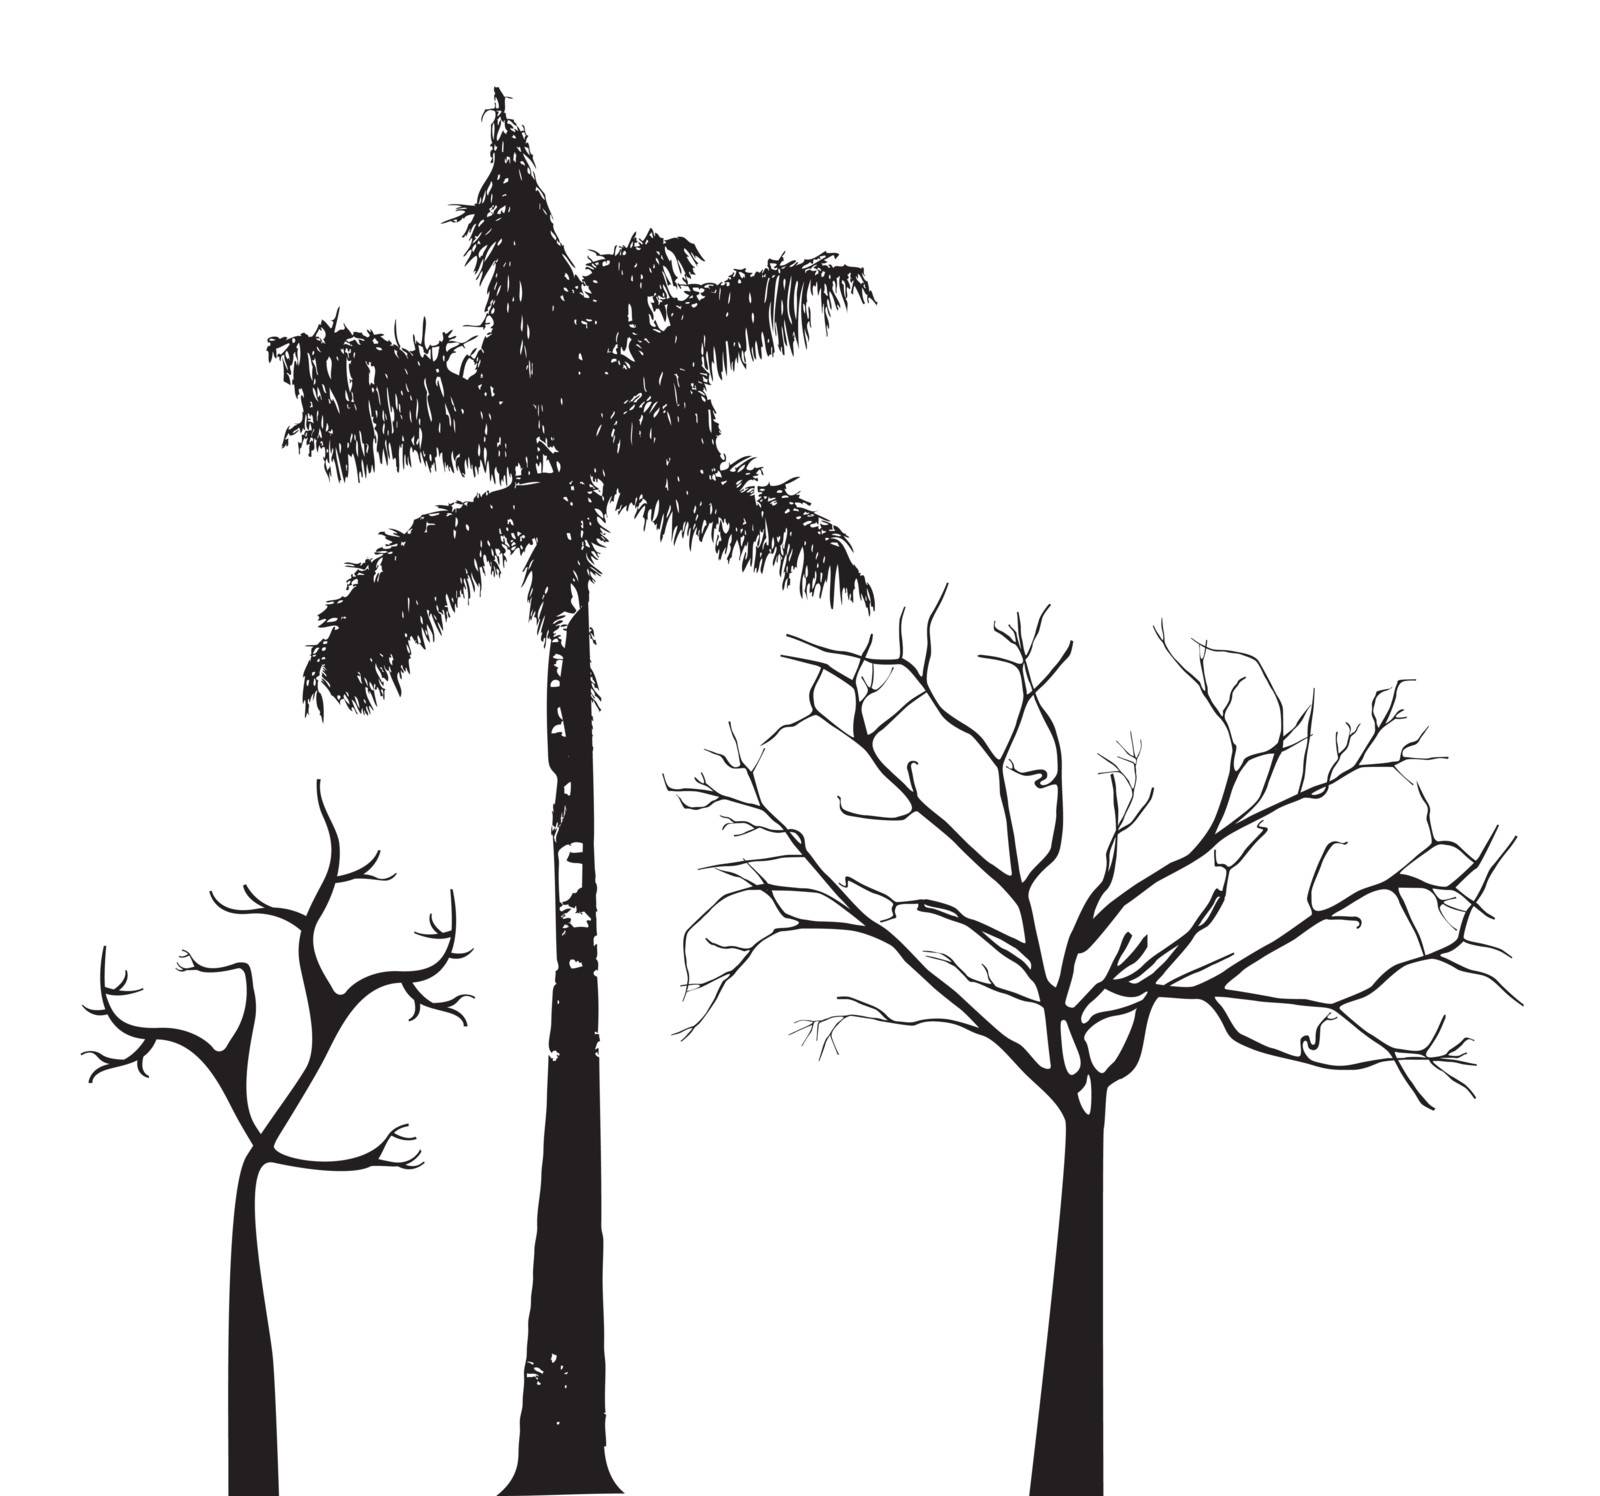 Tree over white background vector illustration. Natural background